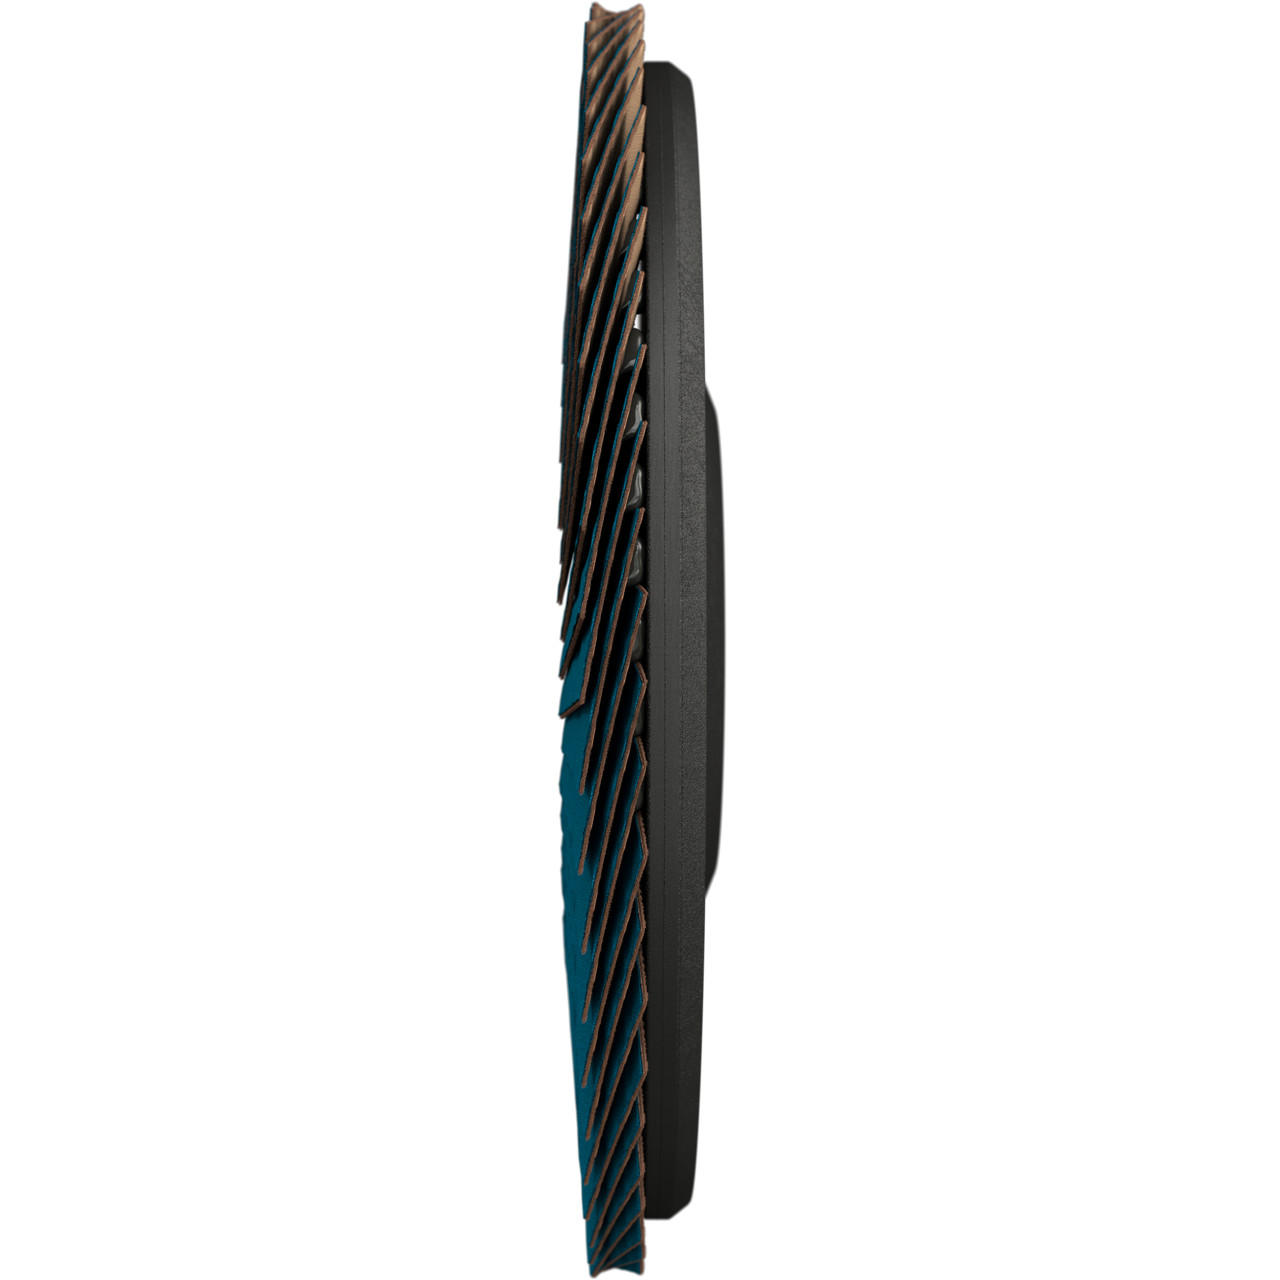 TYROLIT Fächerscheibe DxH 150x22,23 LONGLIFE für Stahl, P40, Form: 28N - gerade Ausführung (Kunststoffträgerkörper), Art. 34063398